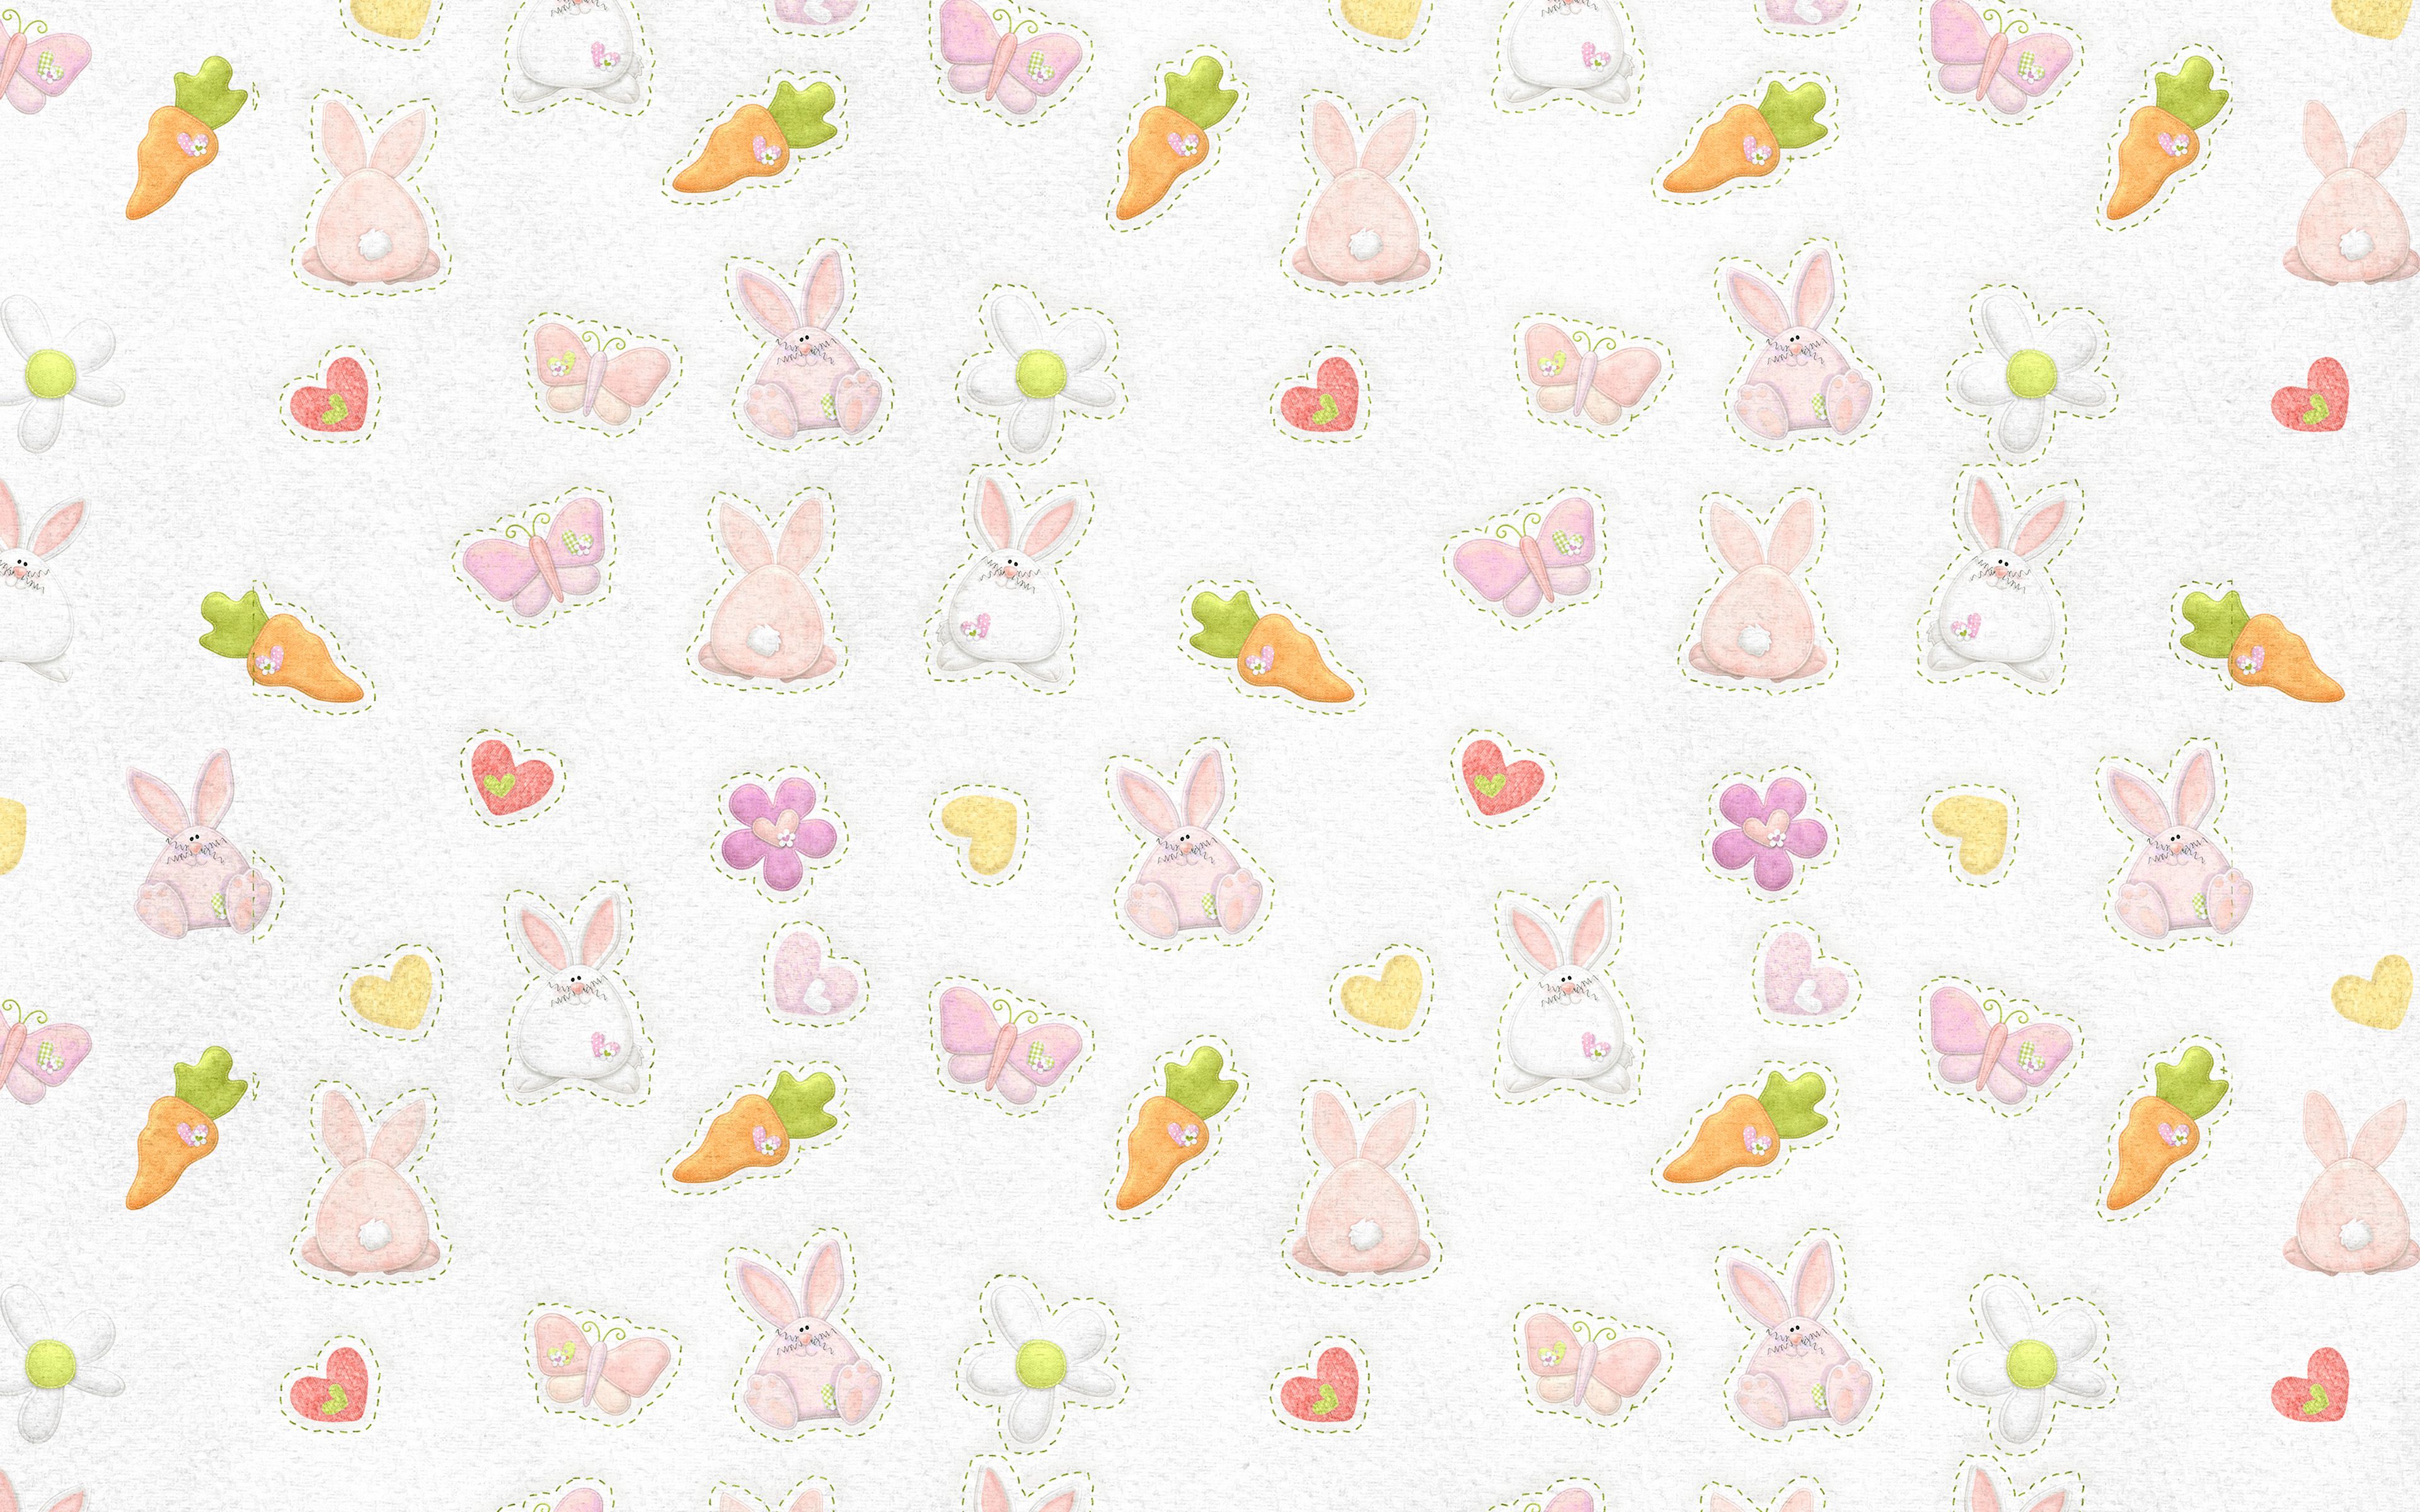 wallpaper for desktop, laptop. cute rabbit chracter pattern